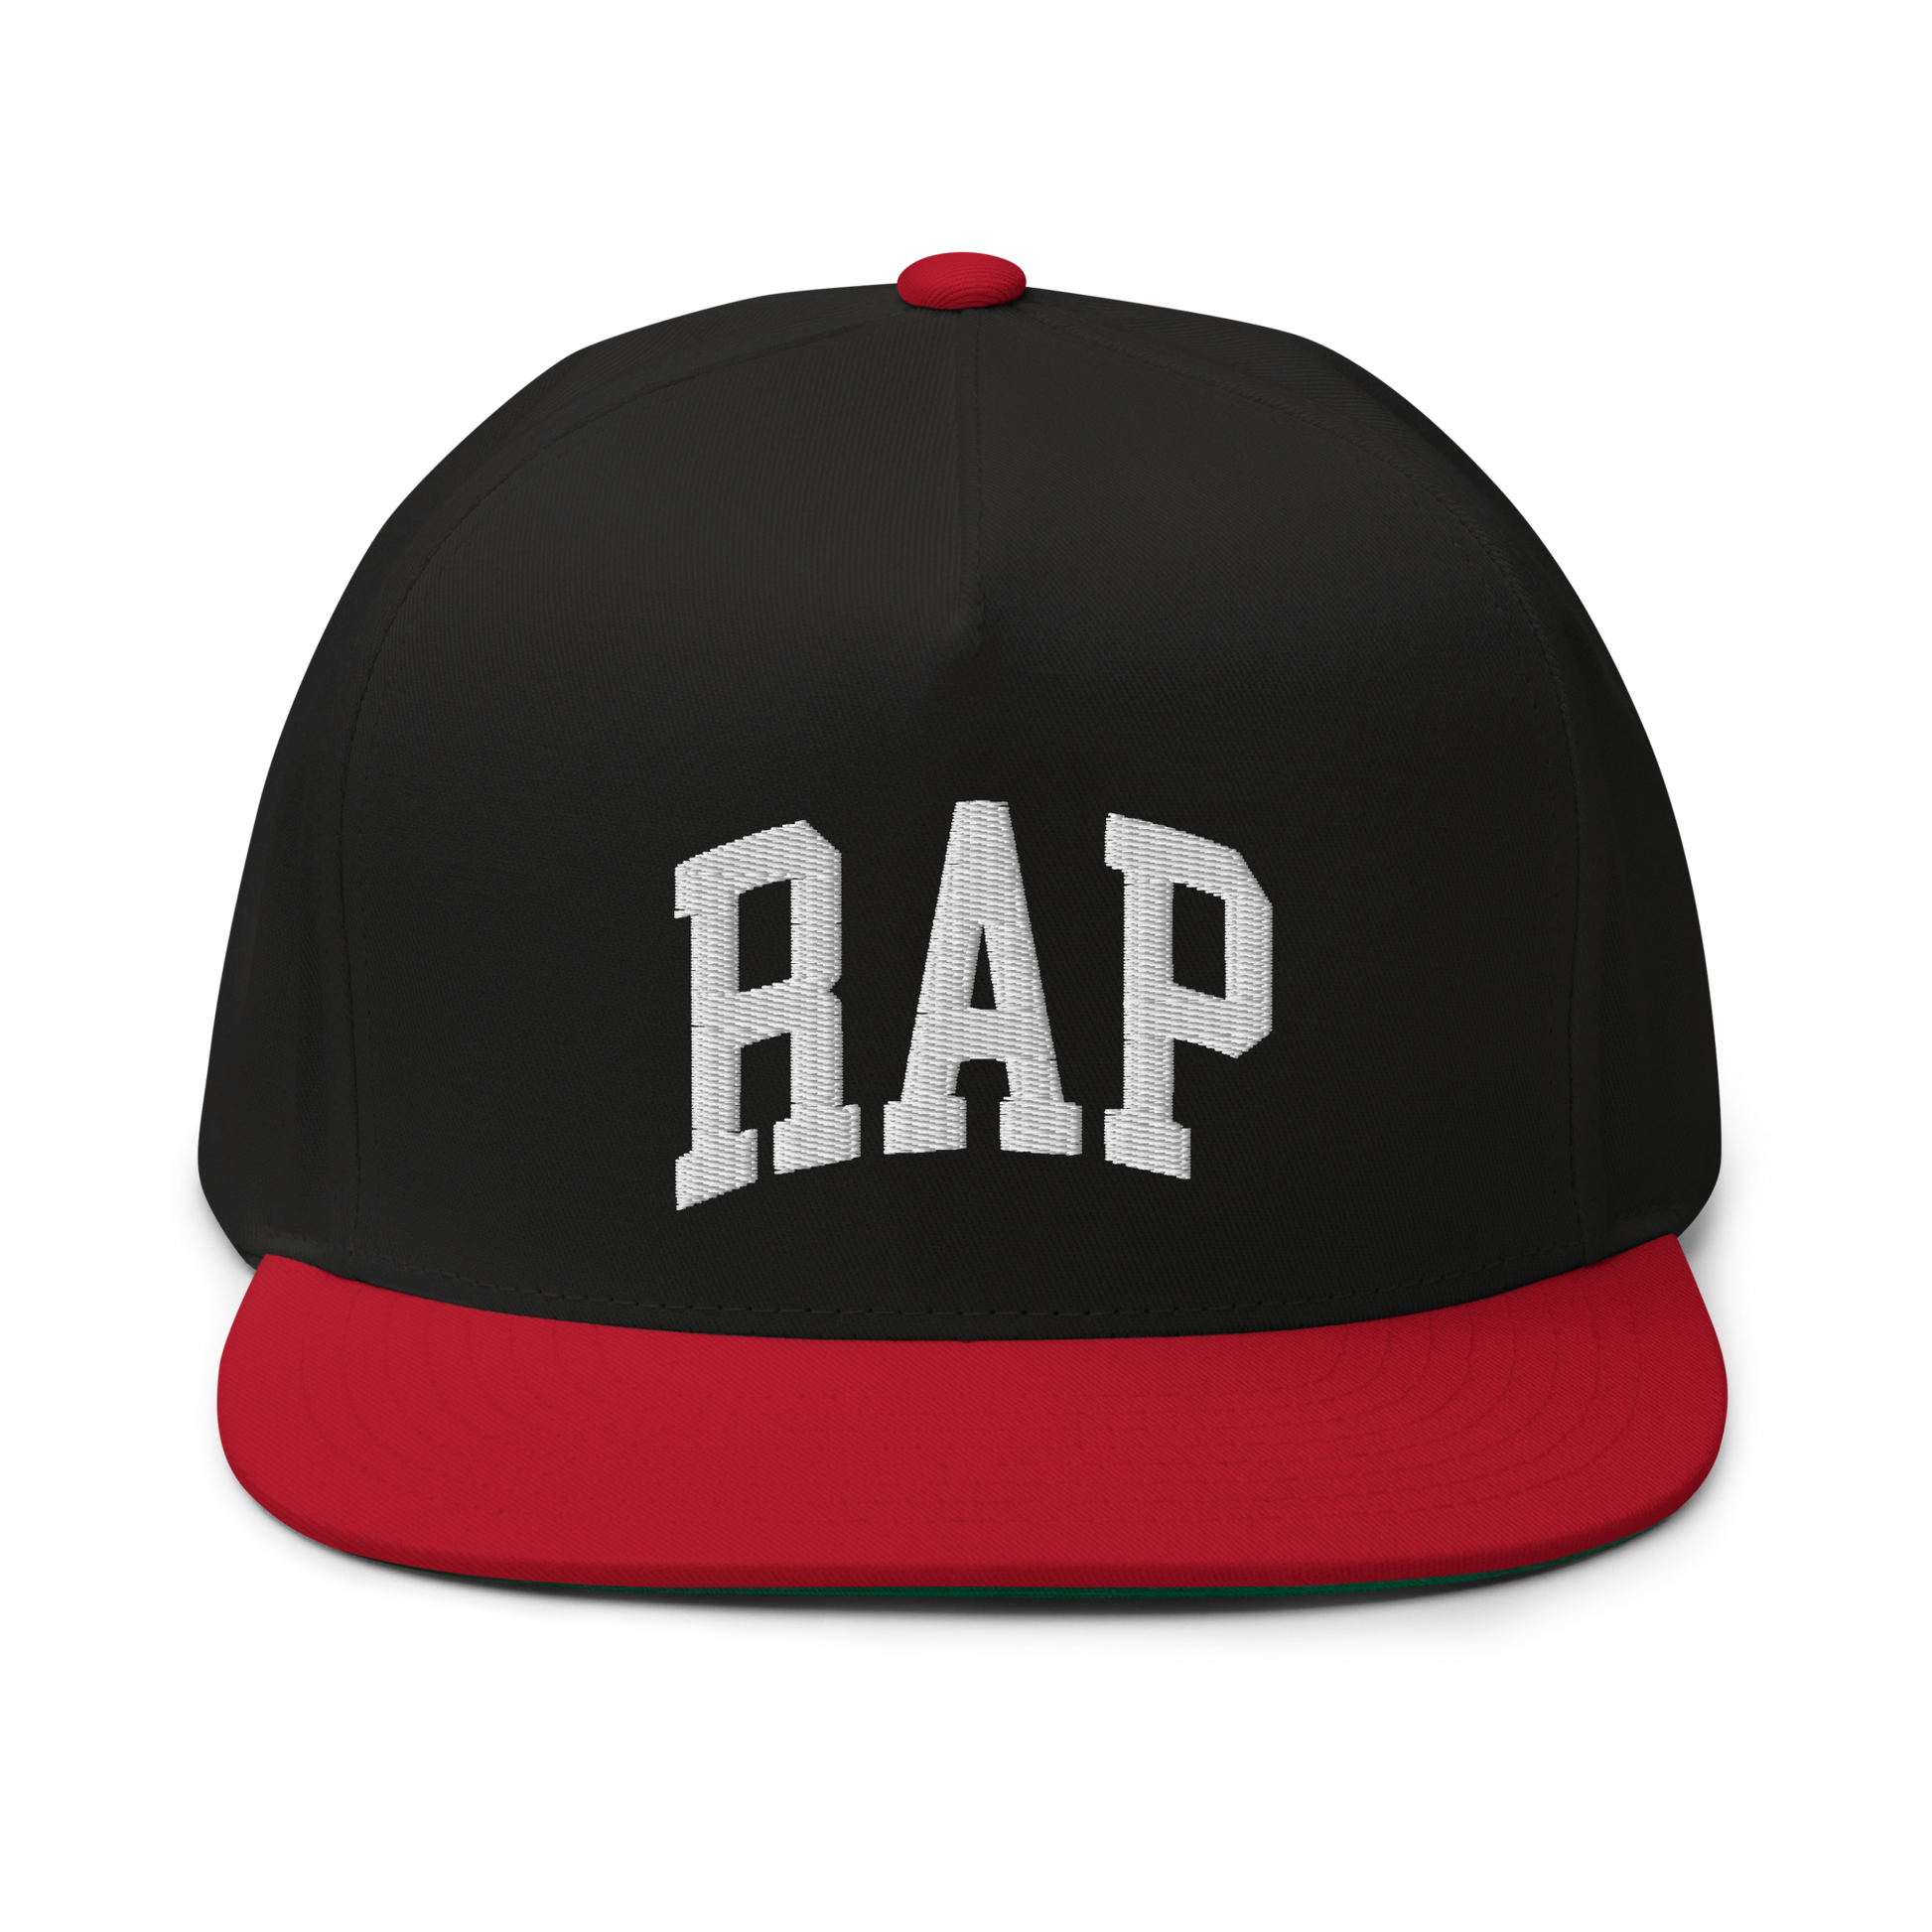 RAP Baseball Snapback Hat - Rapper's Digest